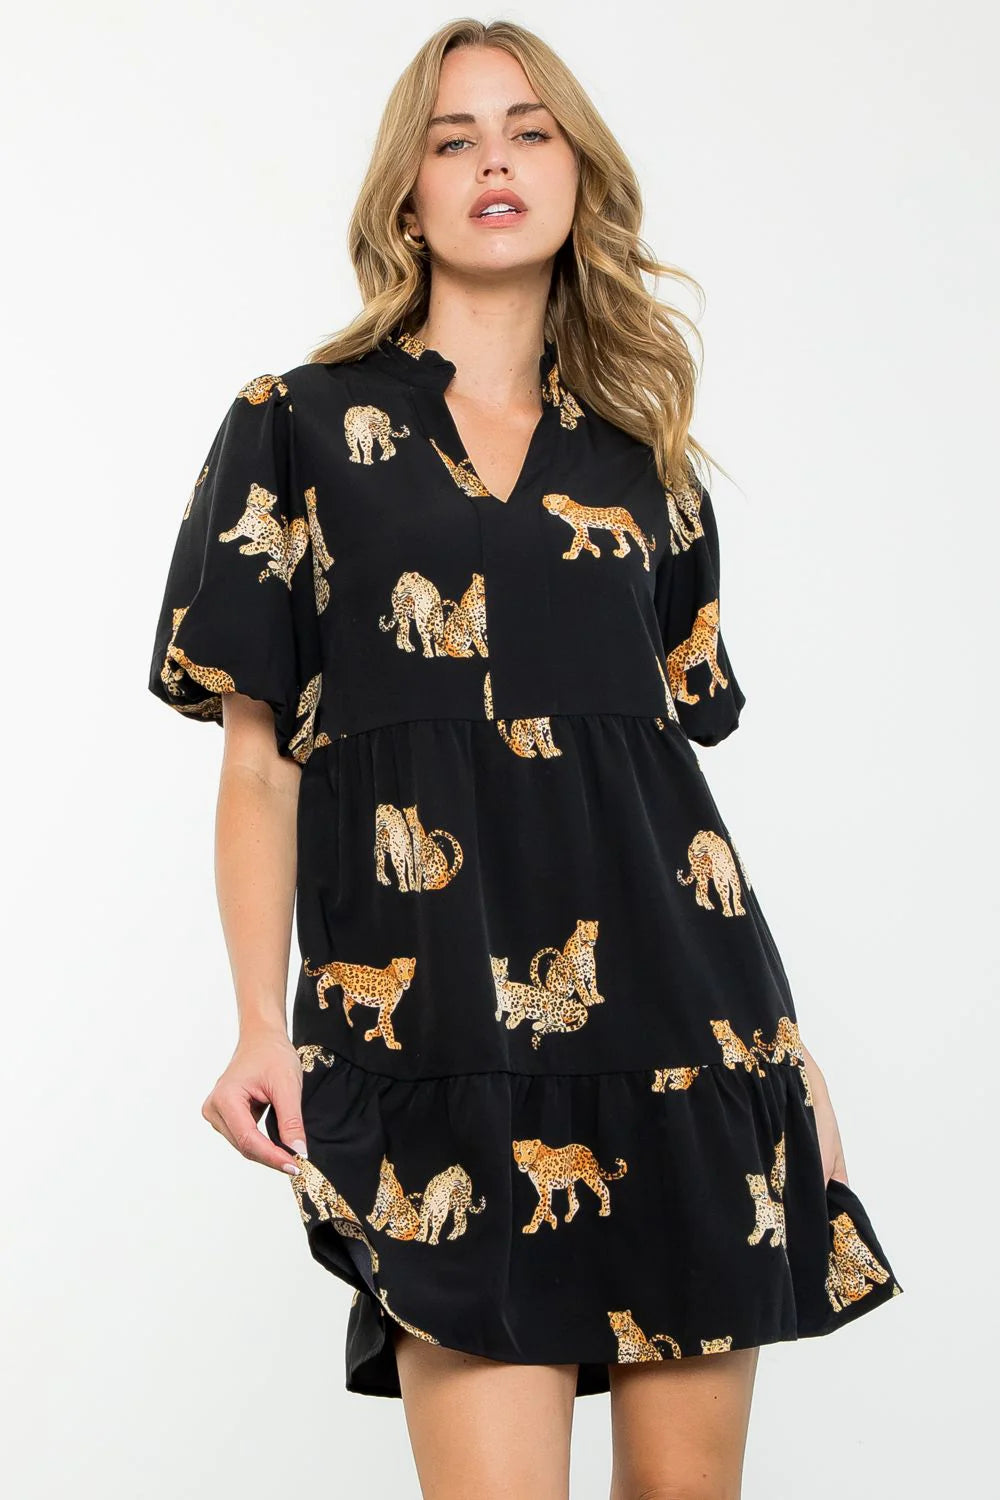 Kelly Cheetah Print Dress